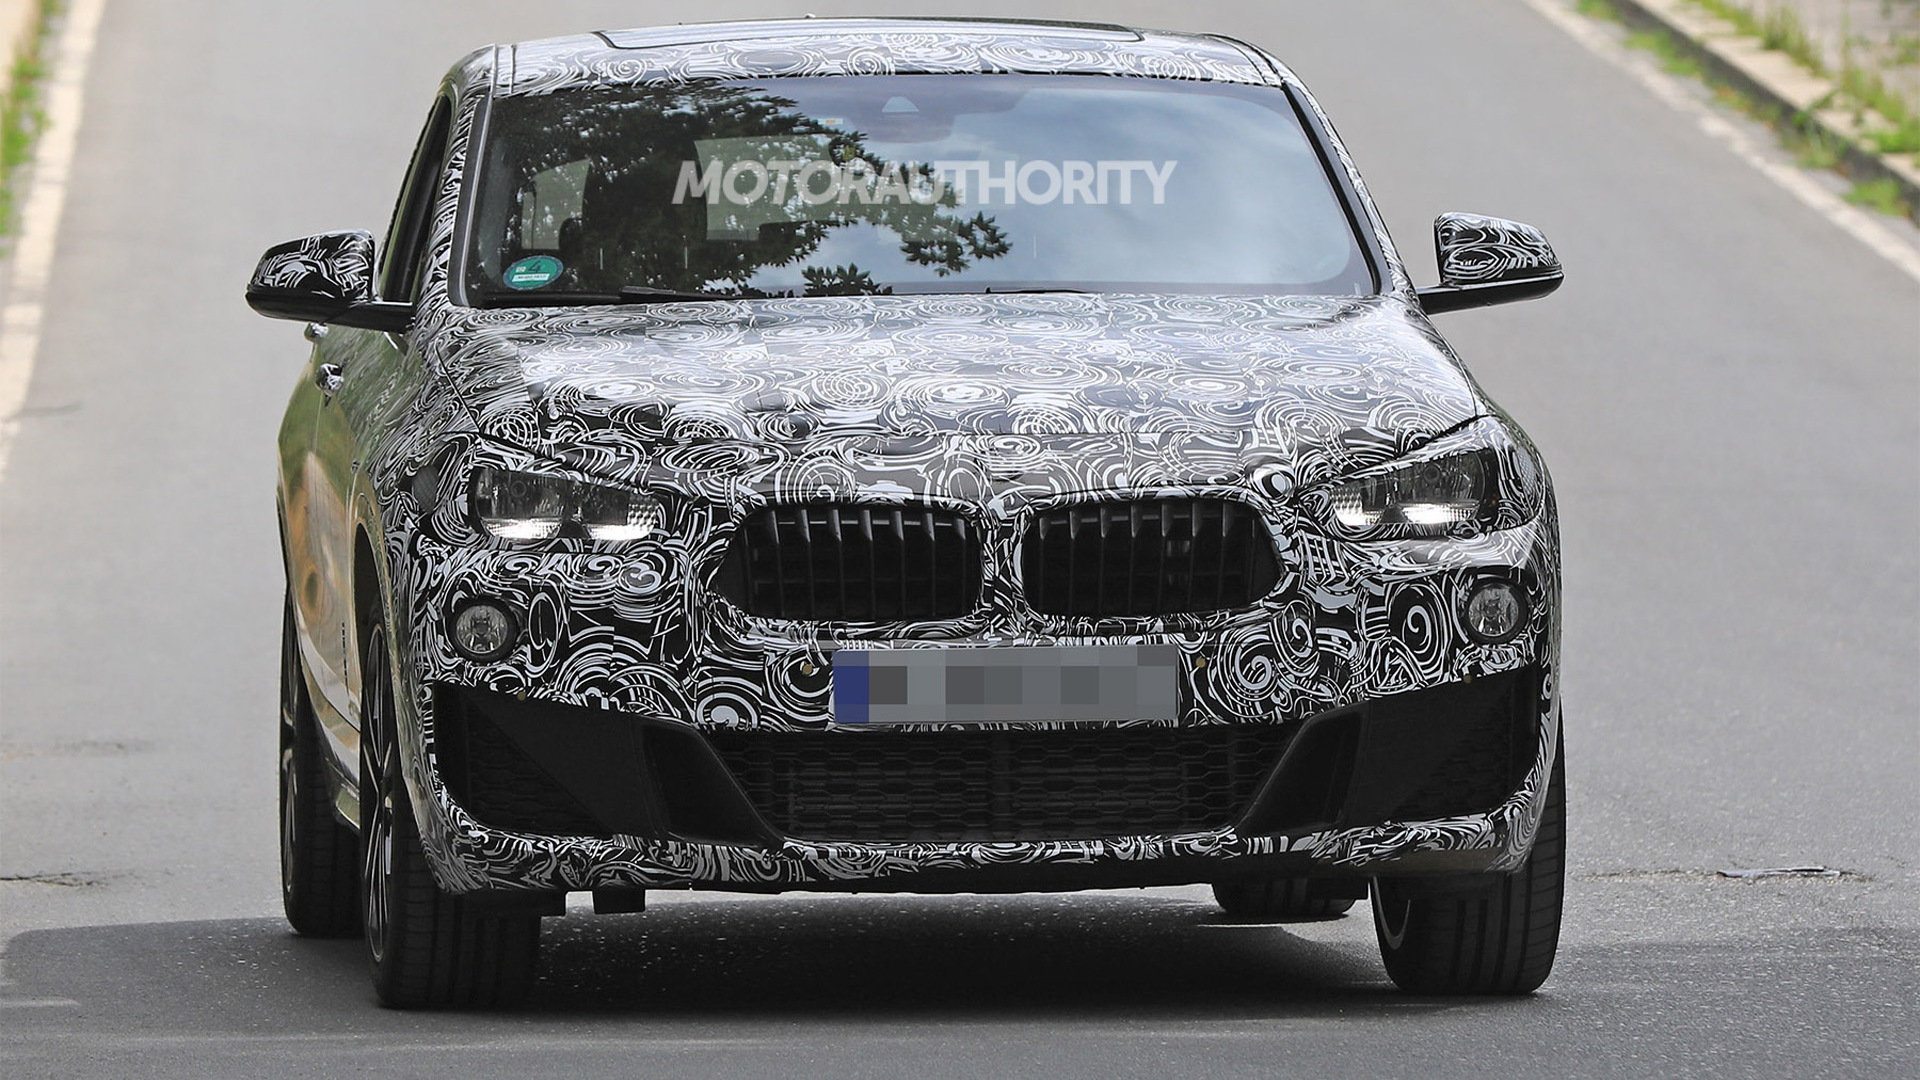 2018 BMW X2 spy shots - Image via S. Baldauf/SB-Medien